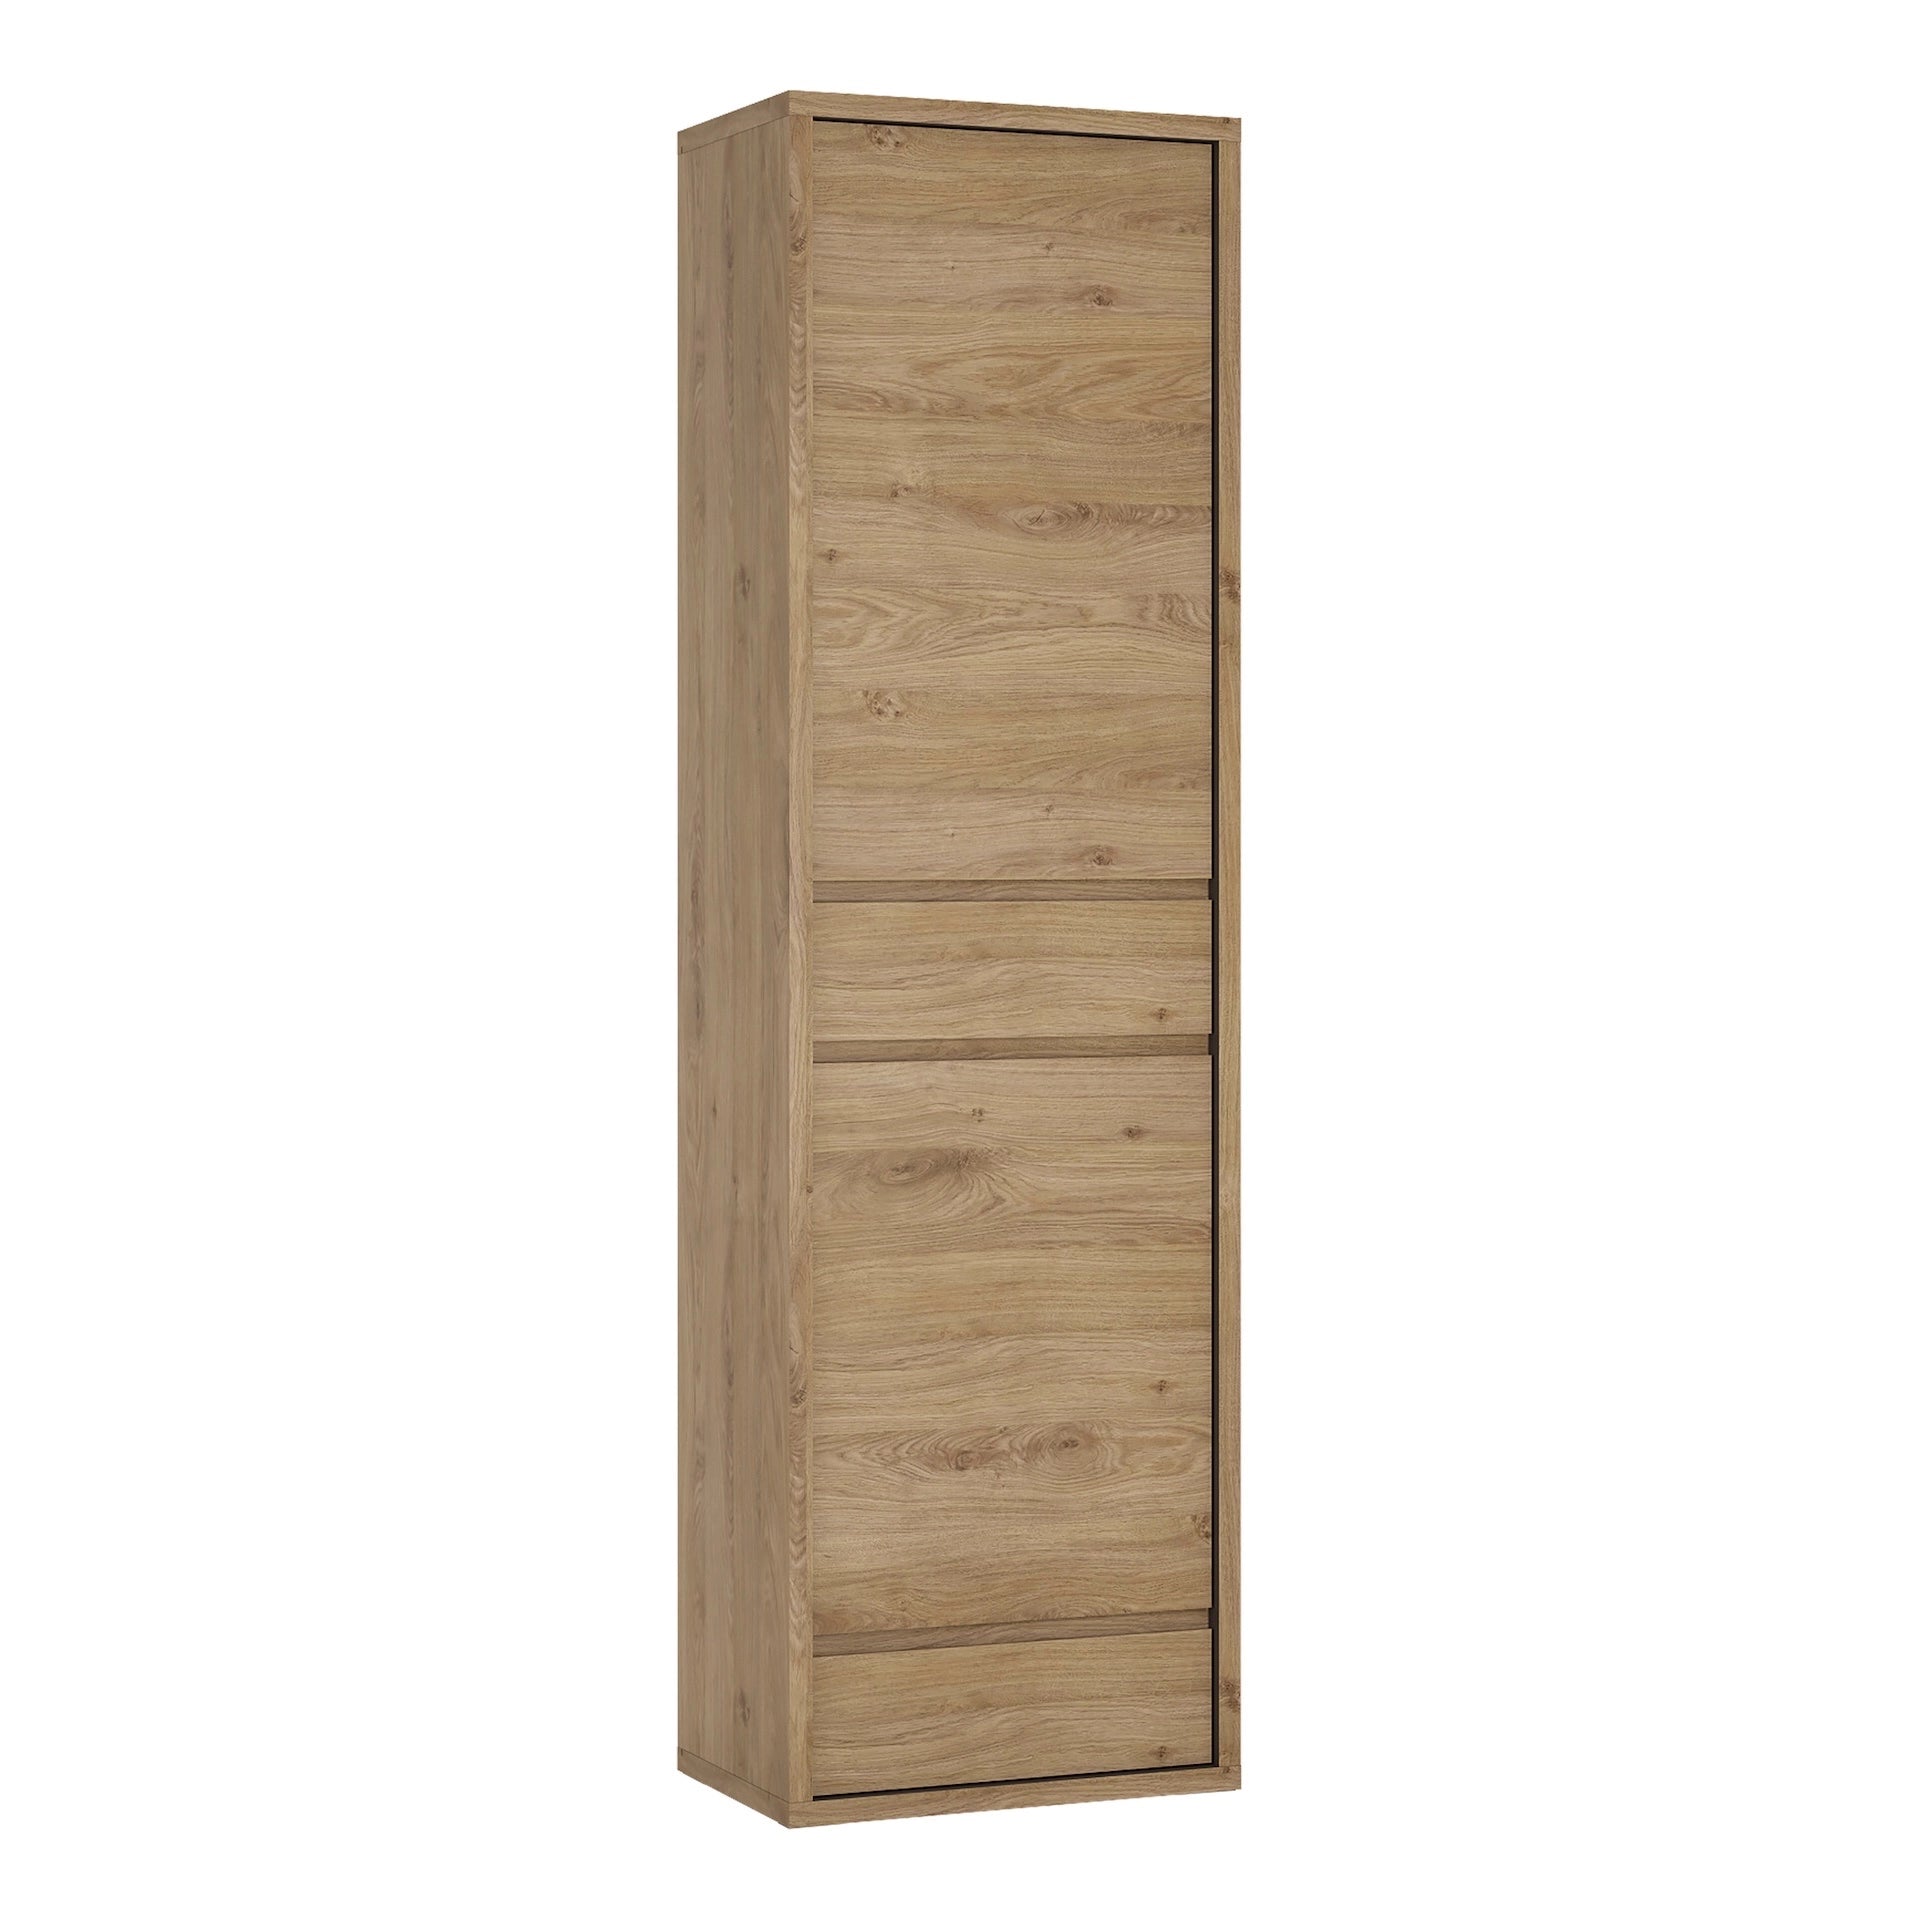 Furniture To Go Shetland 2 Door 2 Drawer Narrow Cabinet